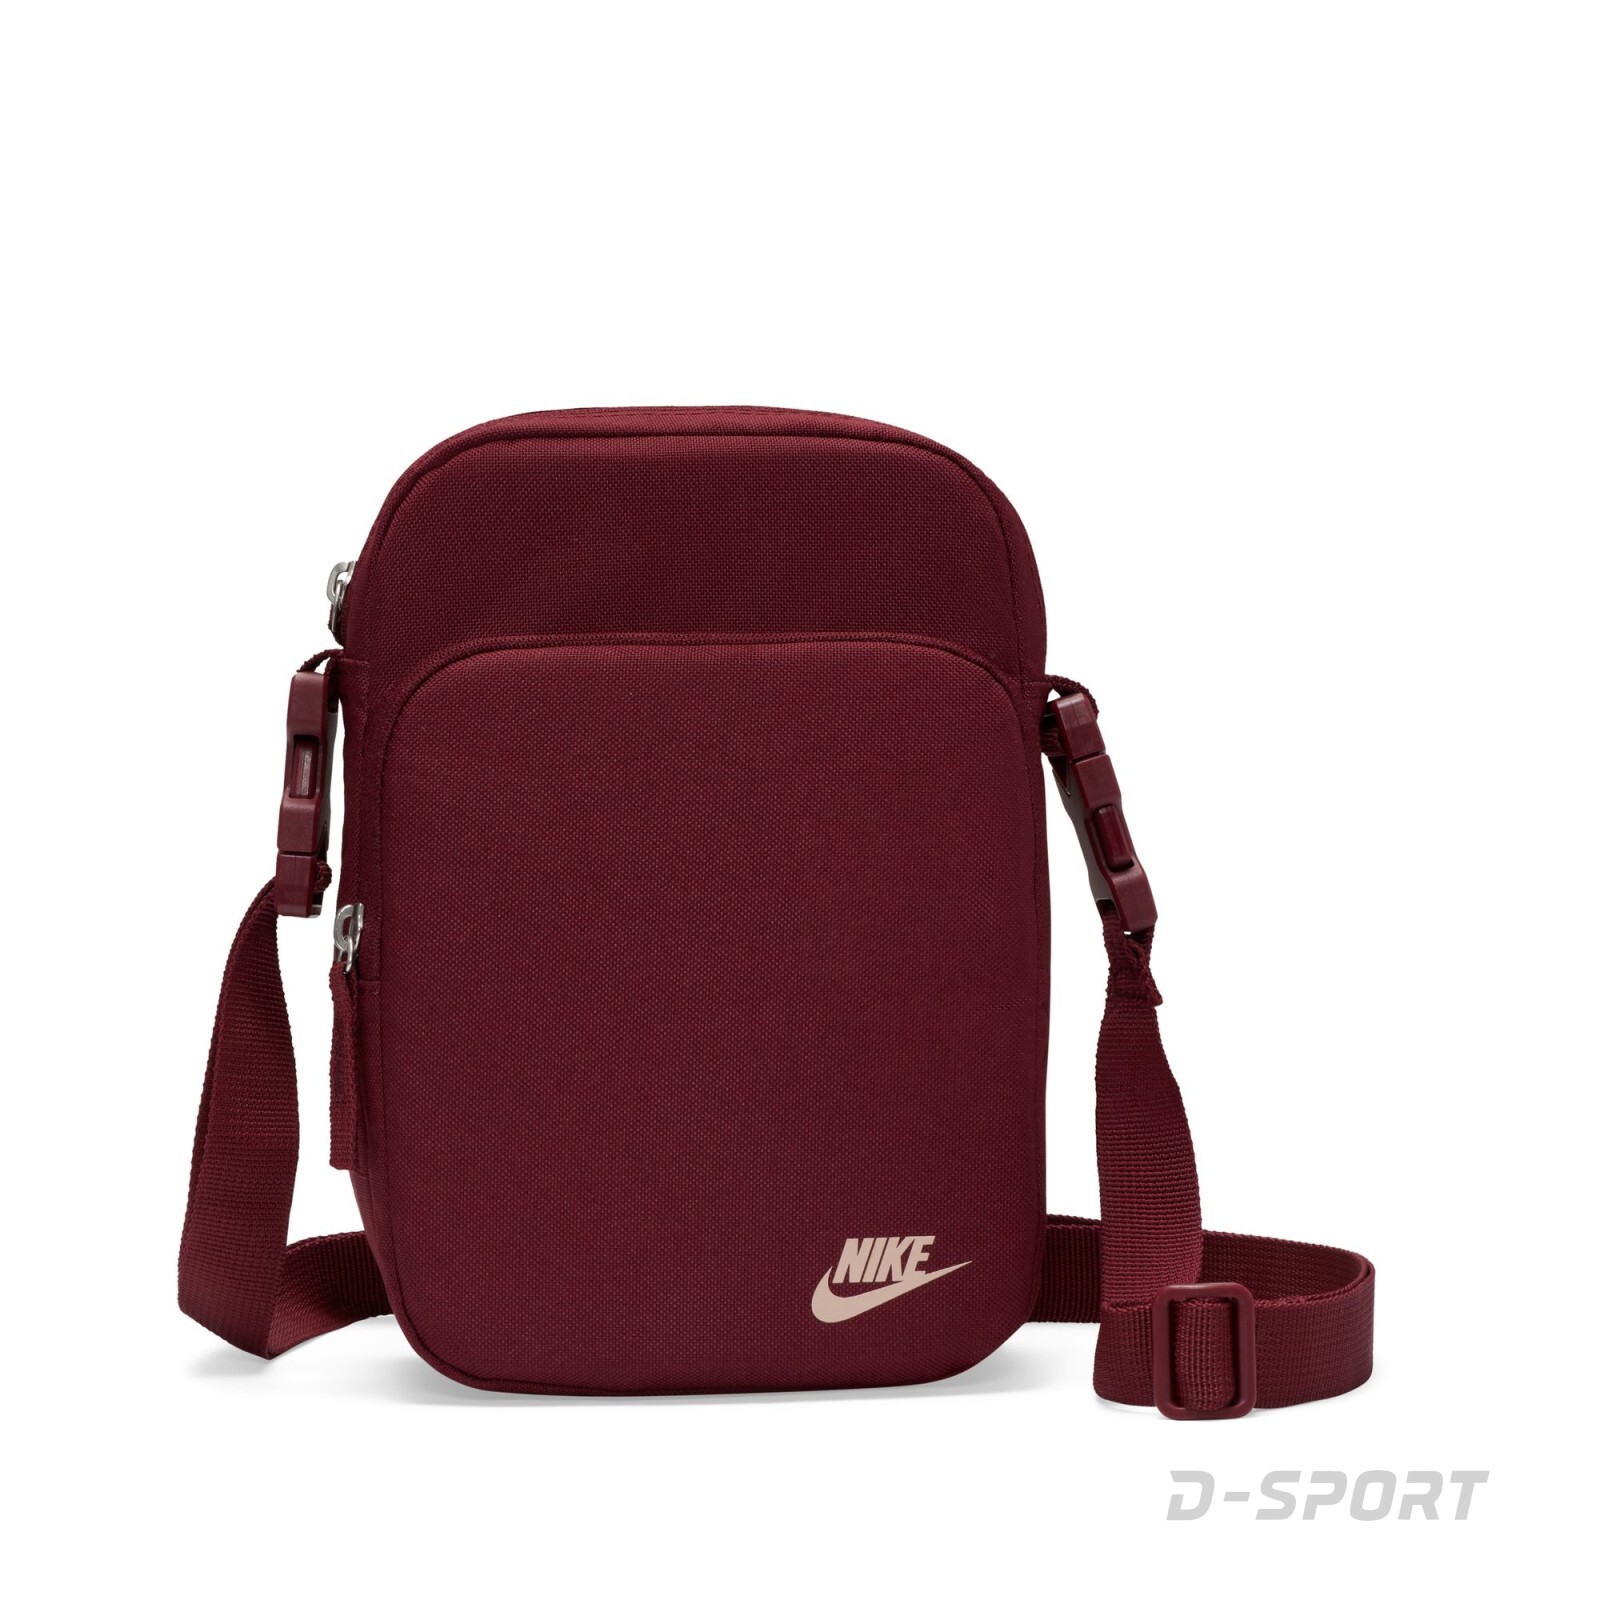 Nike Mini bag